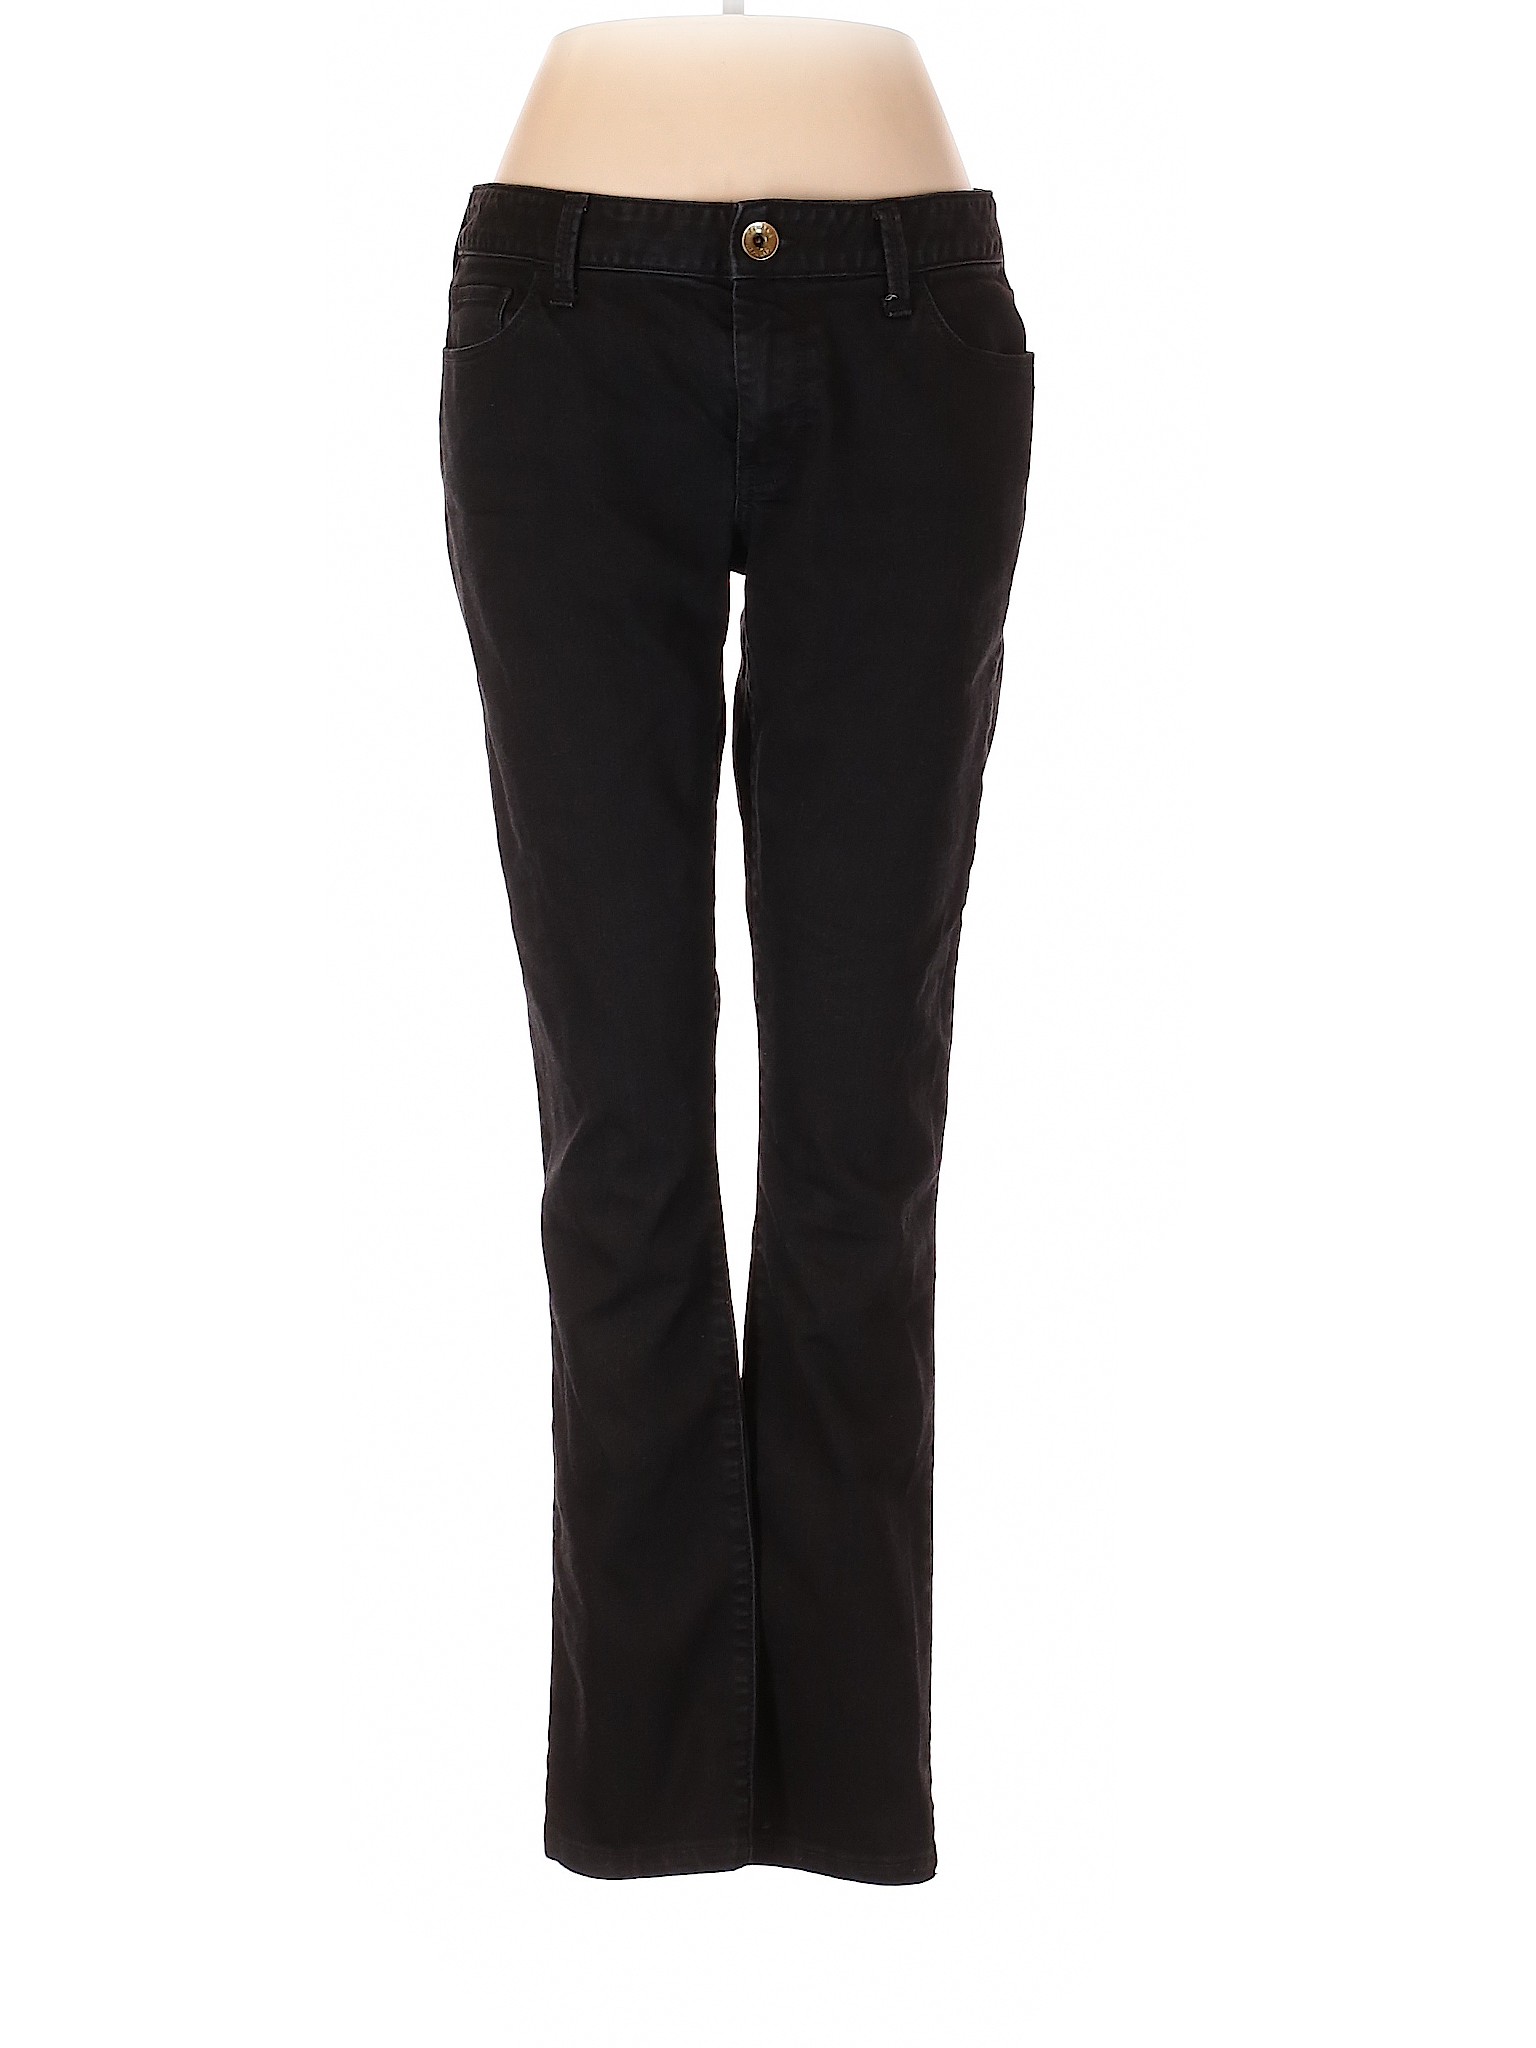 Banana Republic Women Black Jeans 29W | eBay